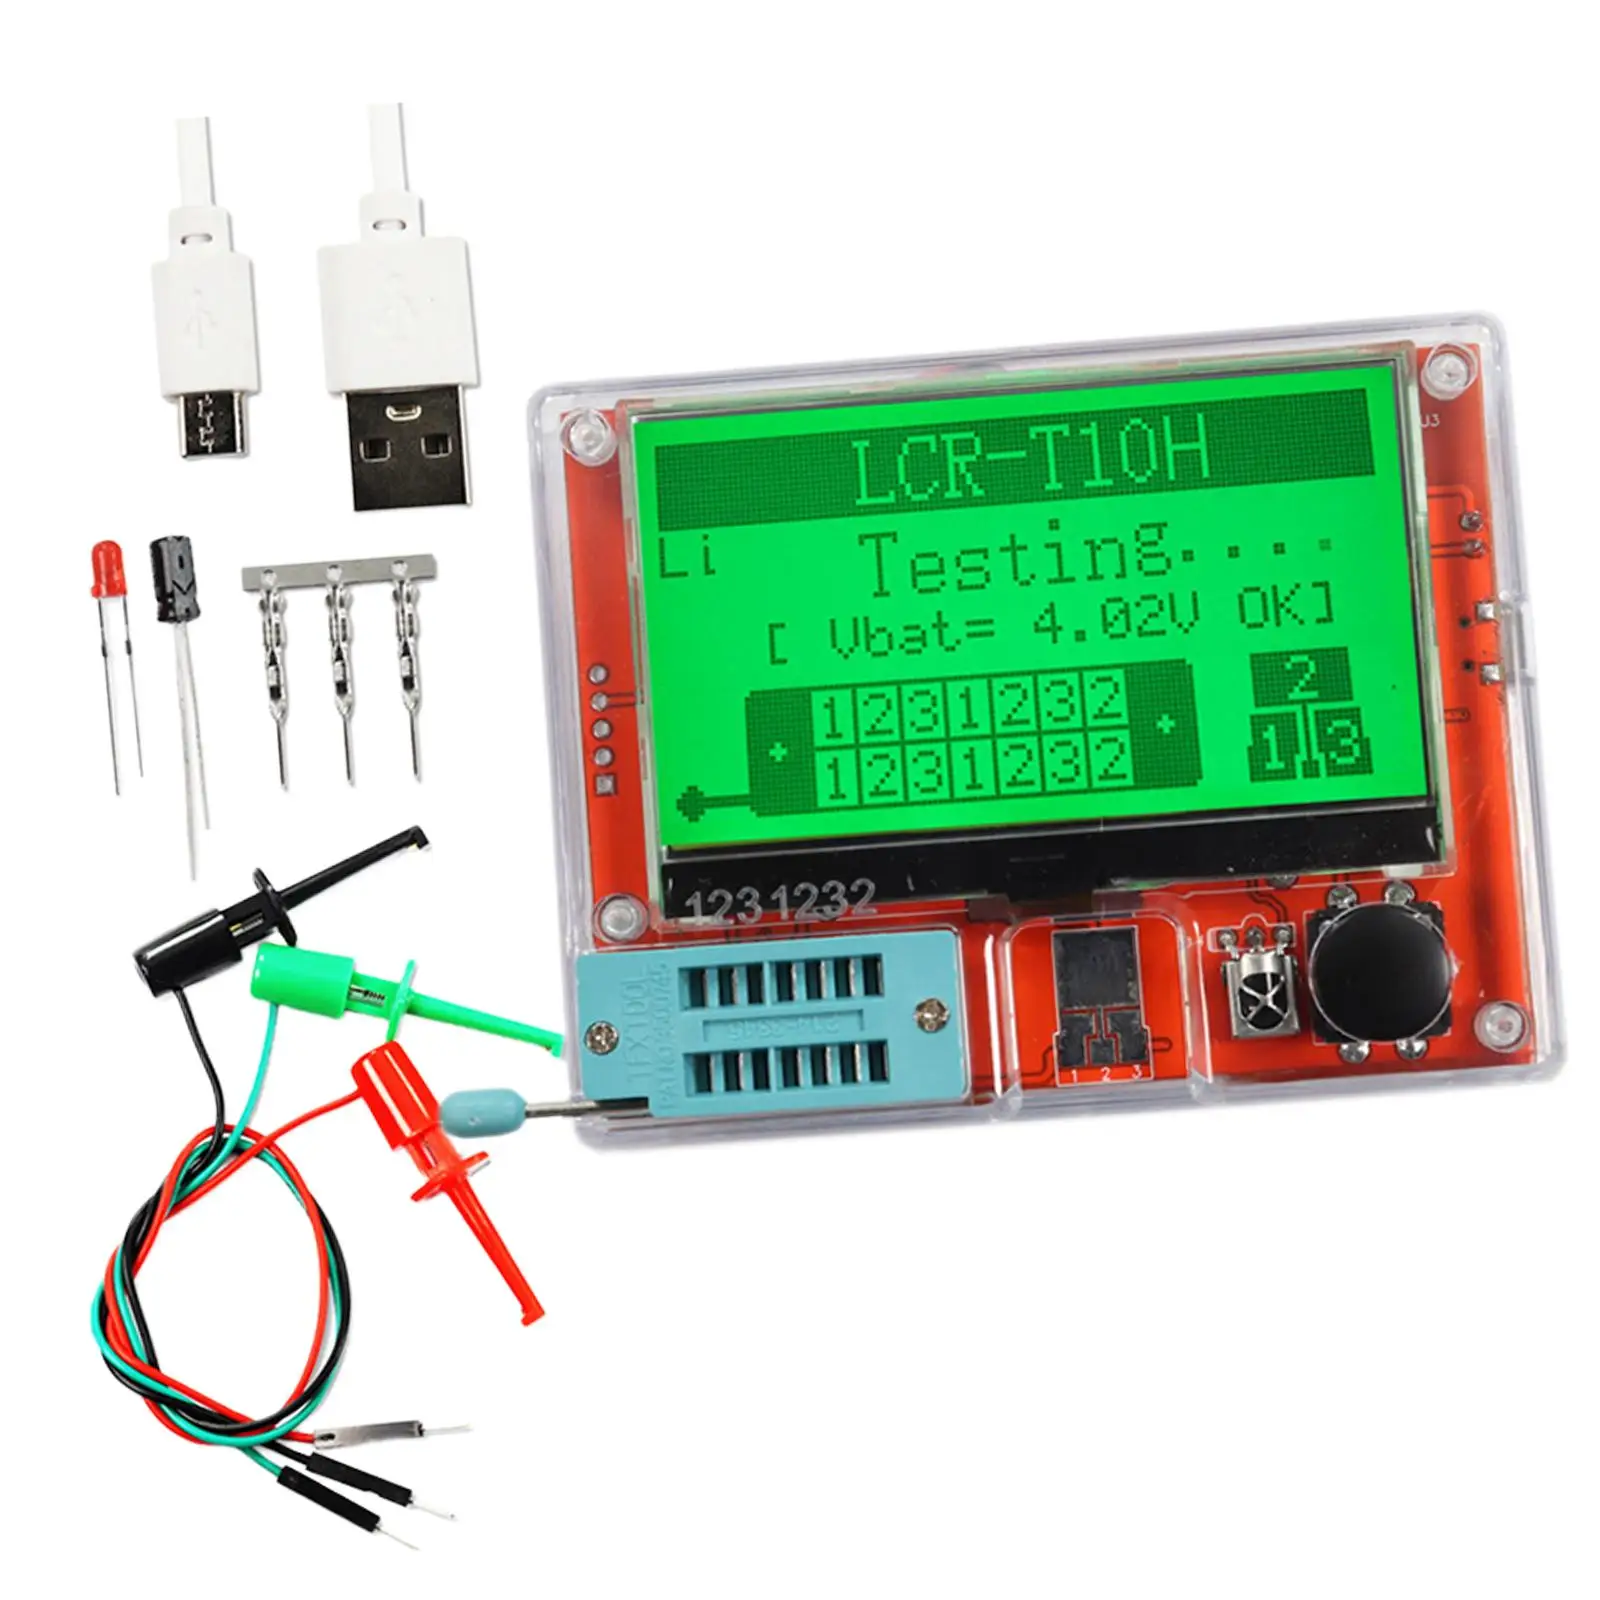 Multifunction Meter PNP LCD Display Graphical Lcr T10H Transistor Tester mos Esr Meter testing Triode Igbt Capacitance Thyristor